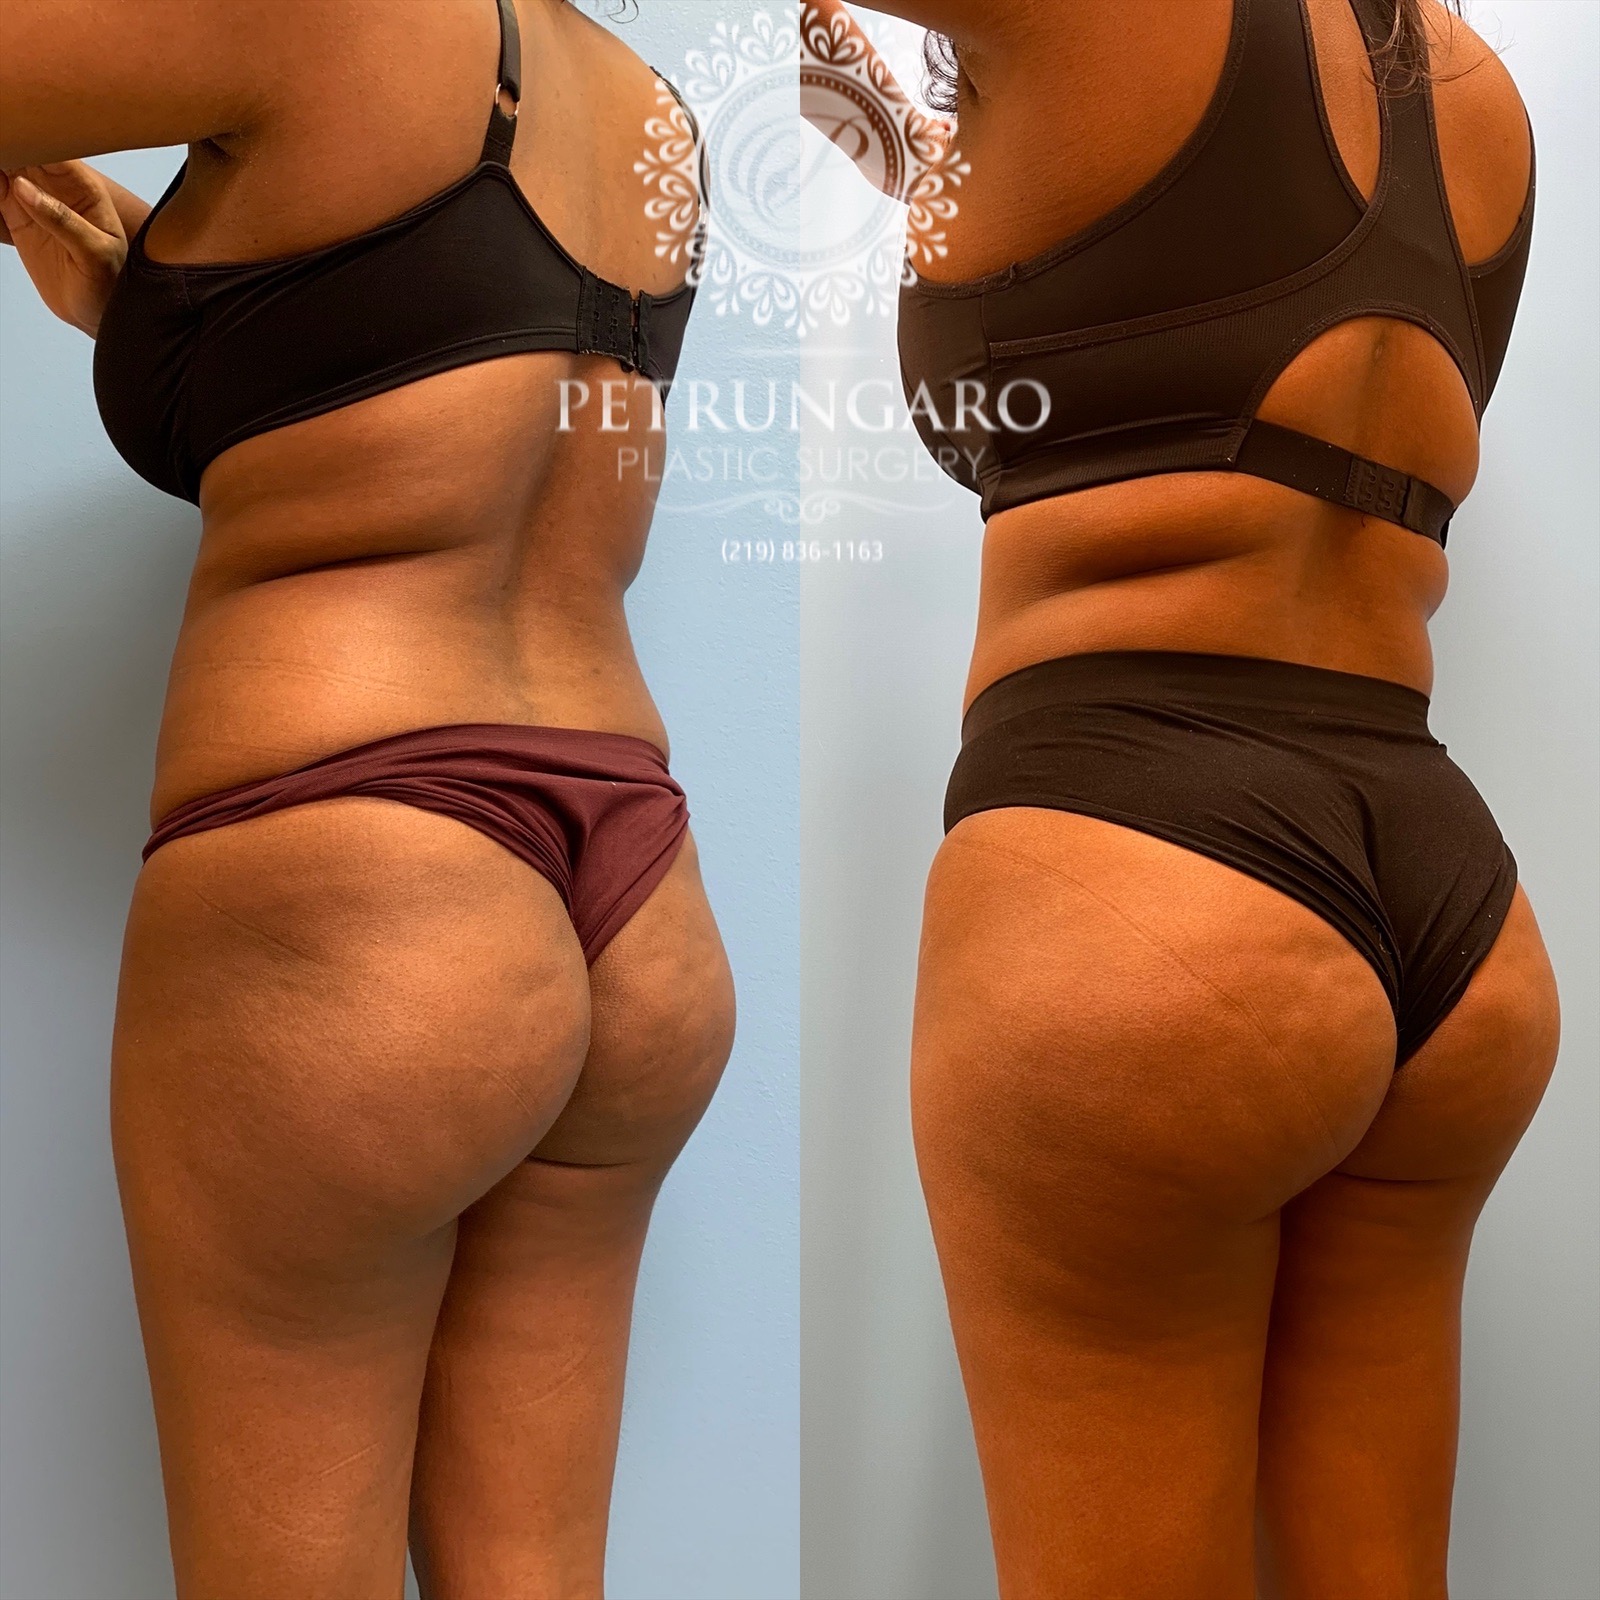 25 year old woman 3 months after Brazilian Butt Lift-8